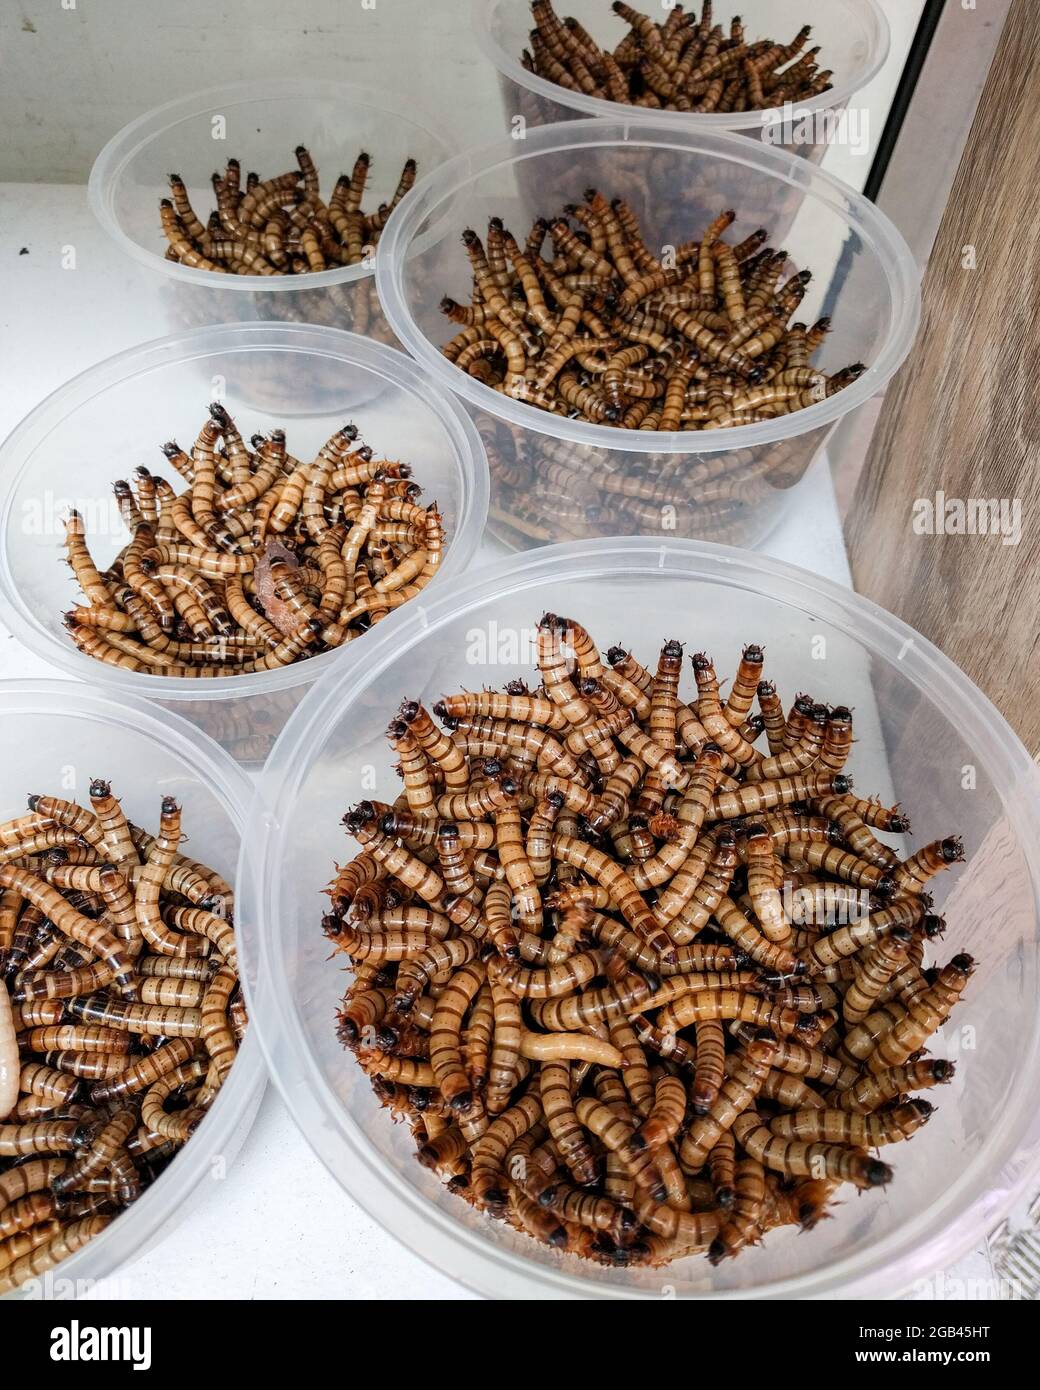 Closeup to plastic tubs filled with Hong Kong caterpillar at a shop in Hong Kong Stock Photo